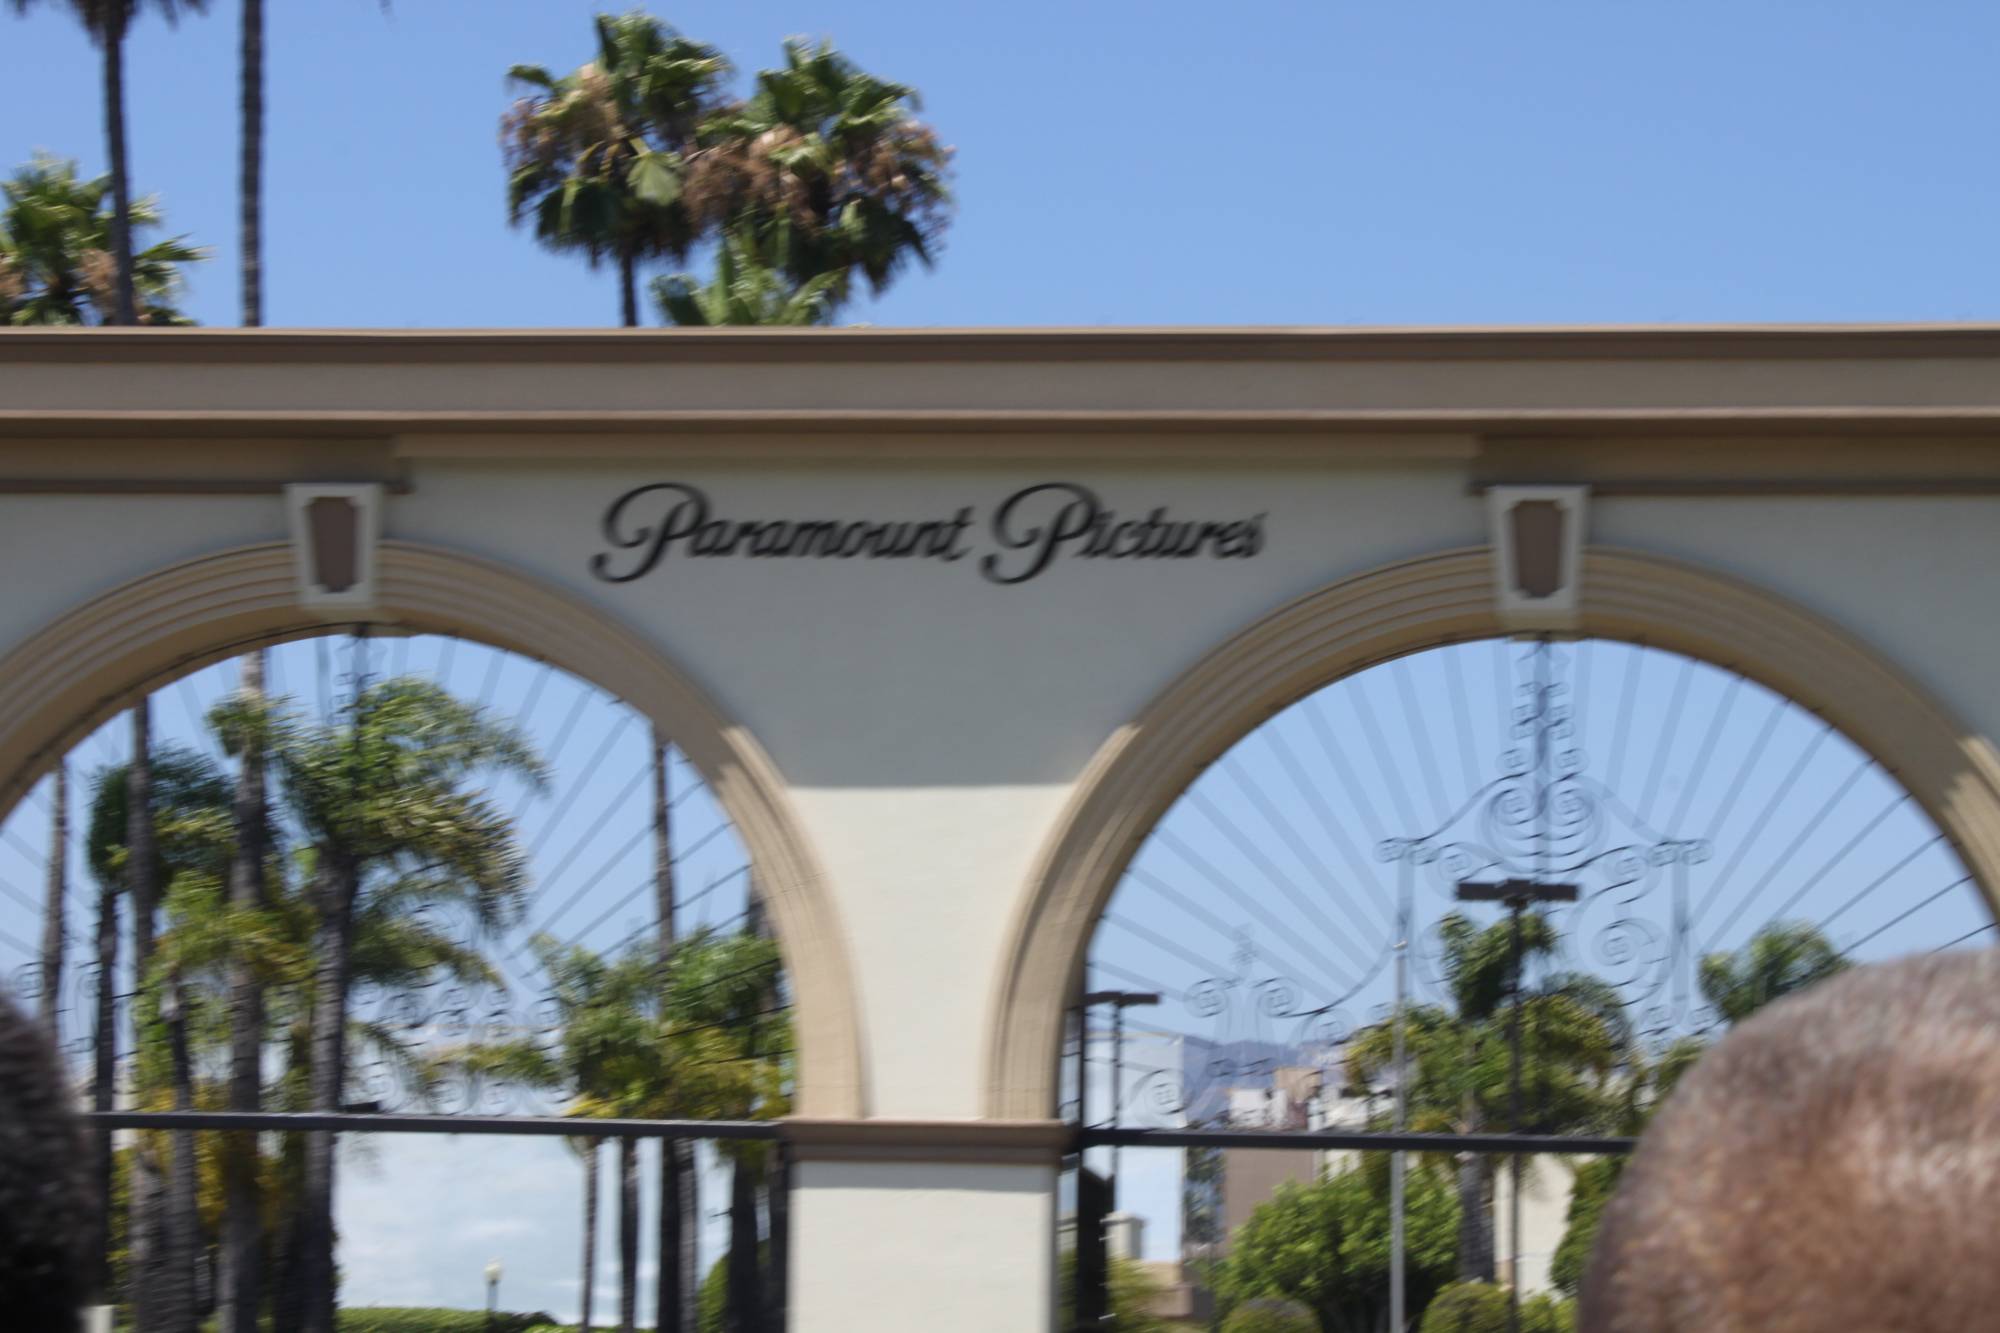 Paramount Pictures studios front gates